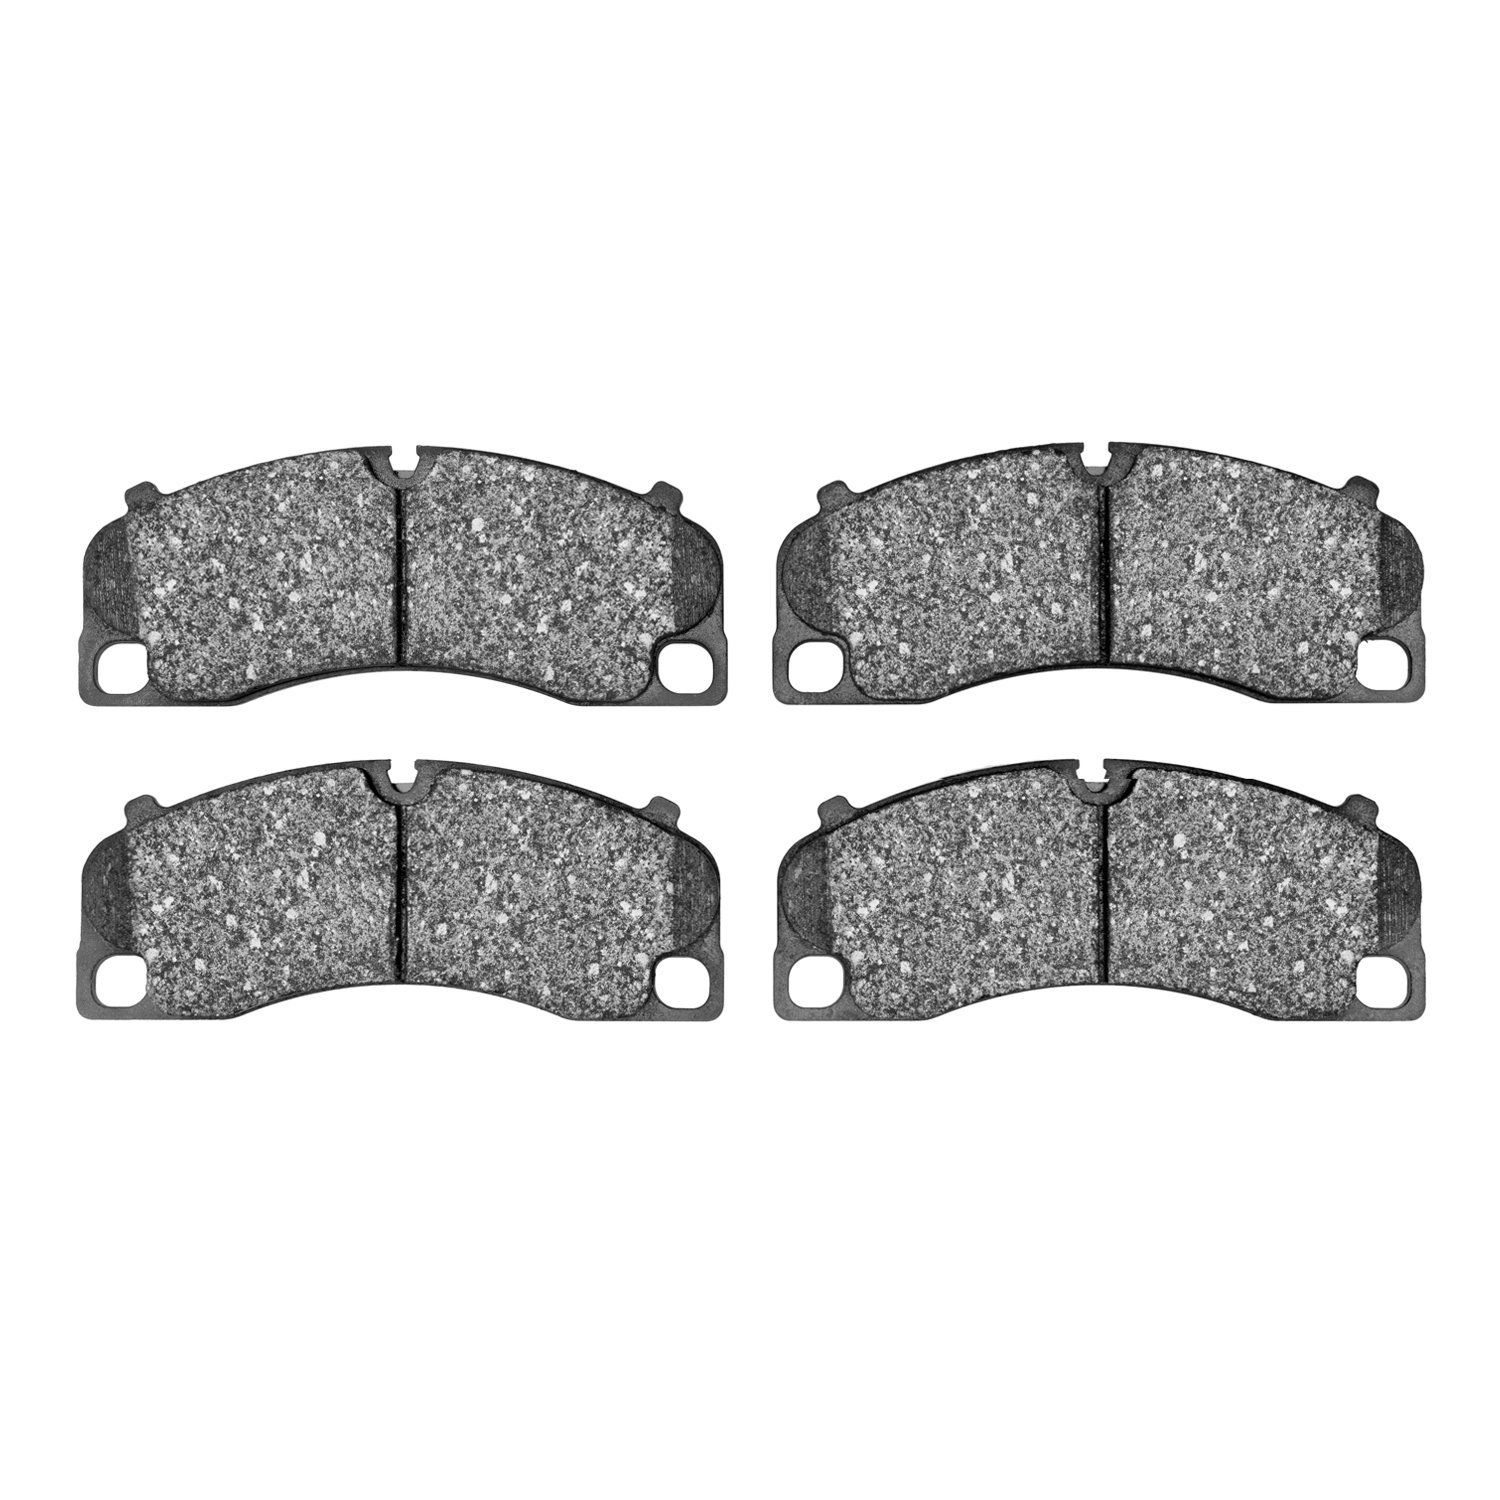 1551-1637-00 5000 Advanced Low-Metallic Brake Pads, Fits Select Porsche, Position: Front